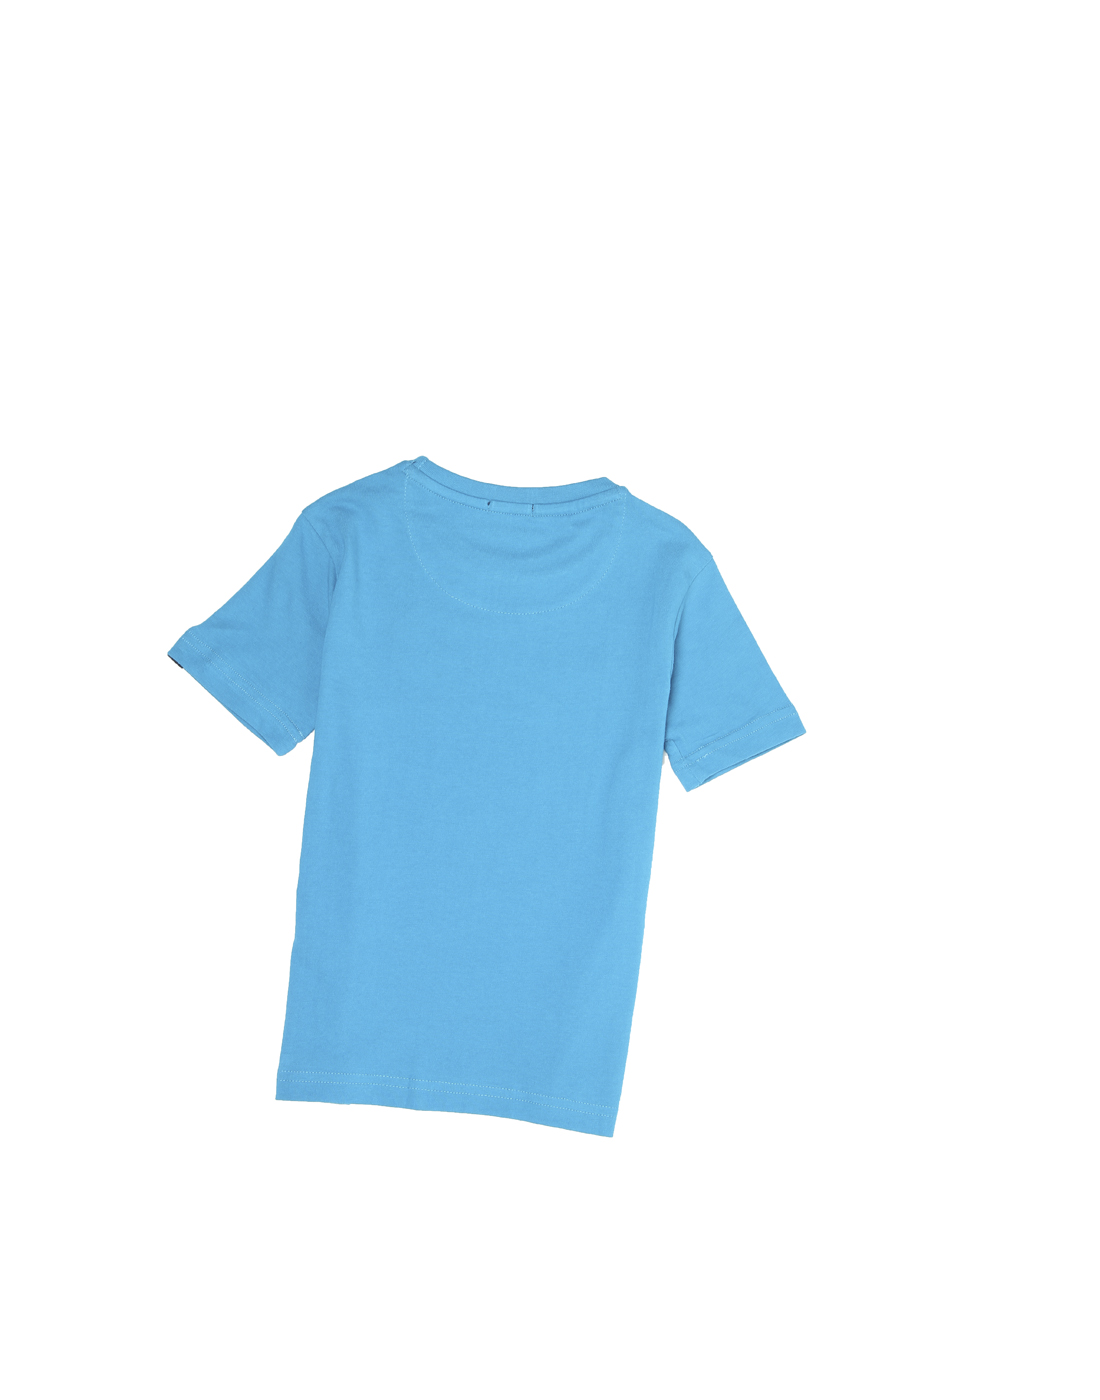 Indian Terrain  Boys Casual Wear Blue T-Shirt